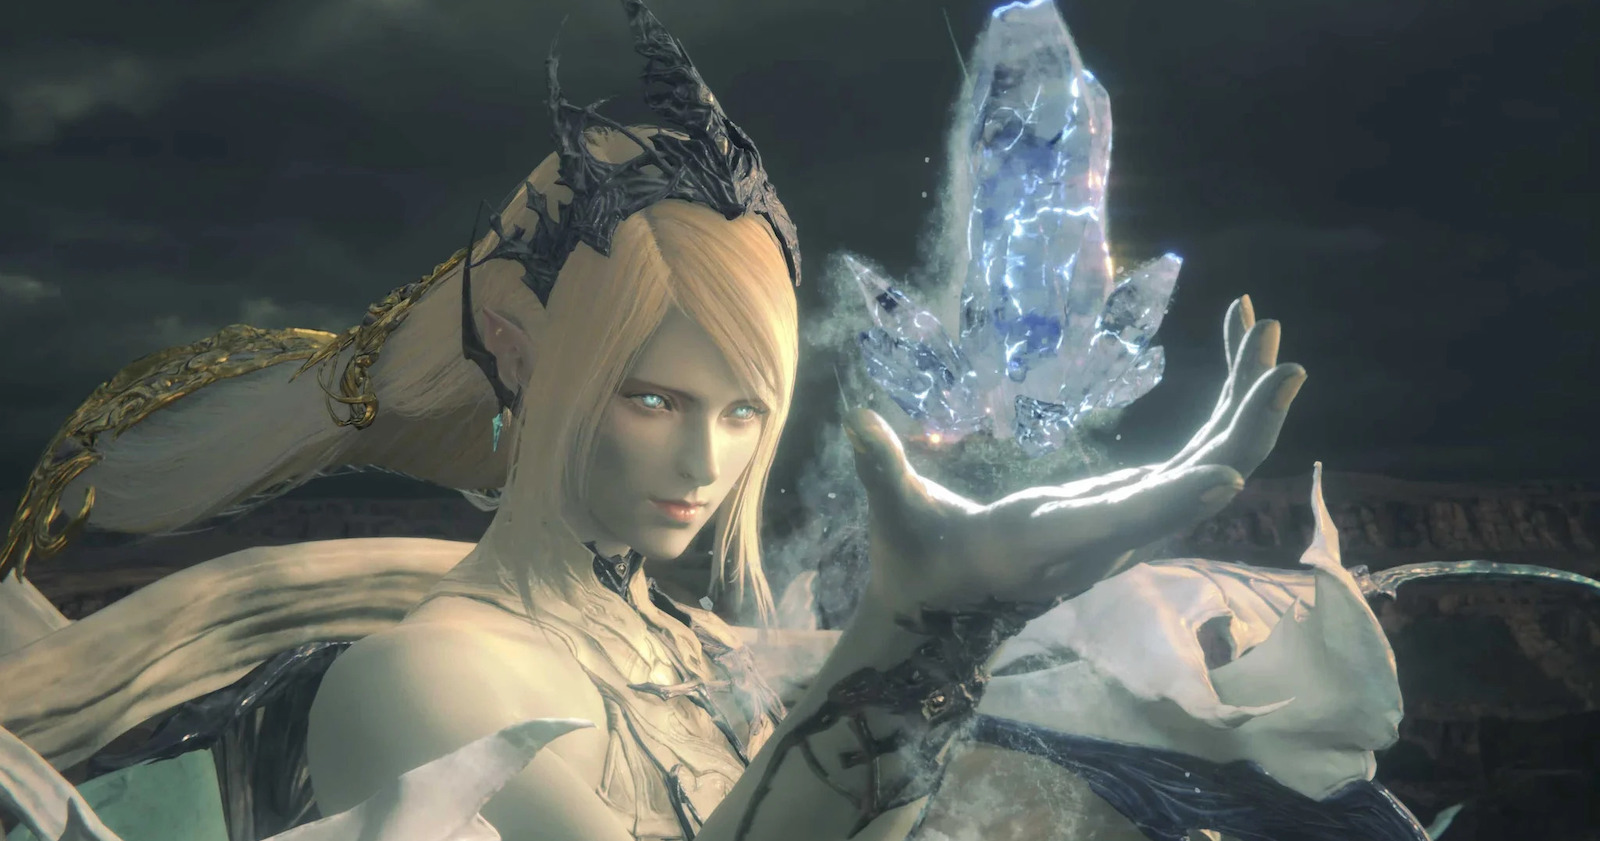 Final Fantasy 16 Launches Better than Diablo 4 & Dead Island 2 in UK